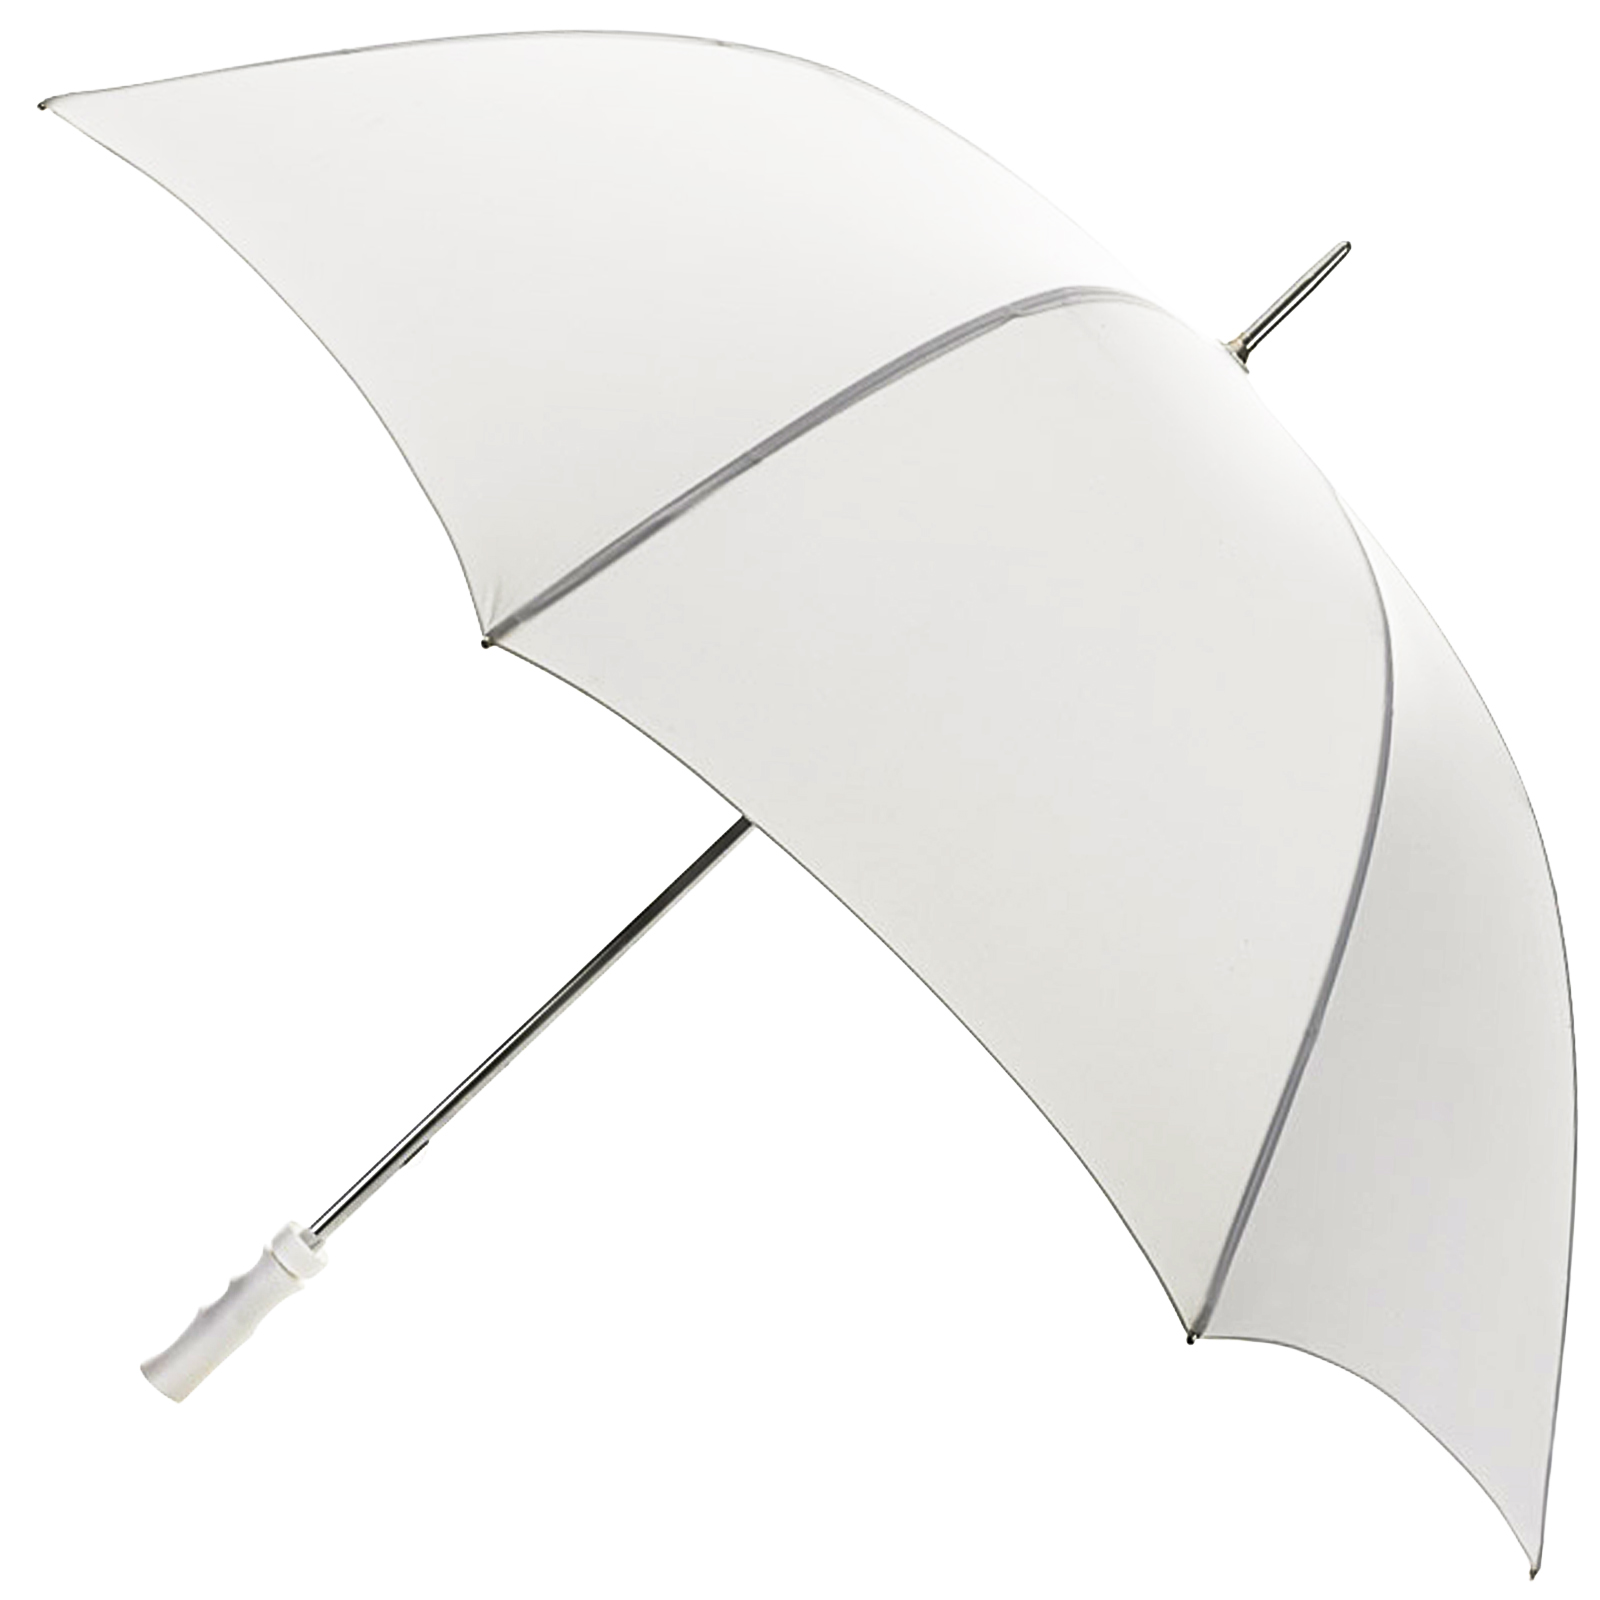 Fairway White Golf Umbrella - Ideal for Weddings